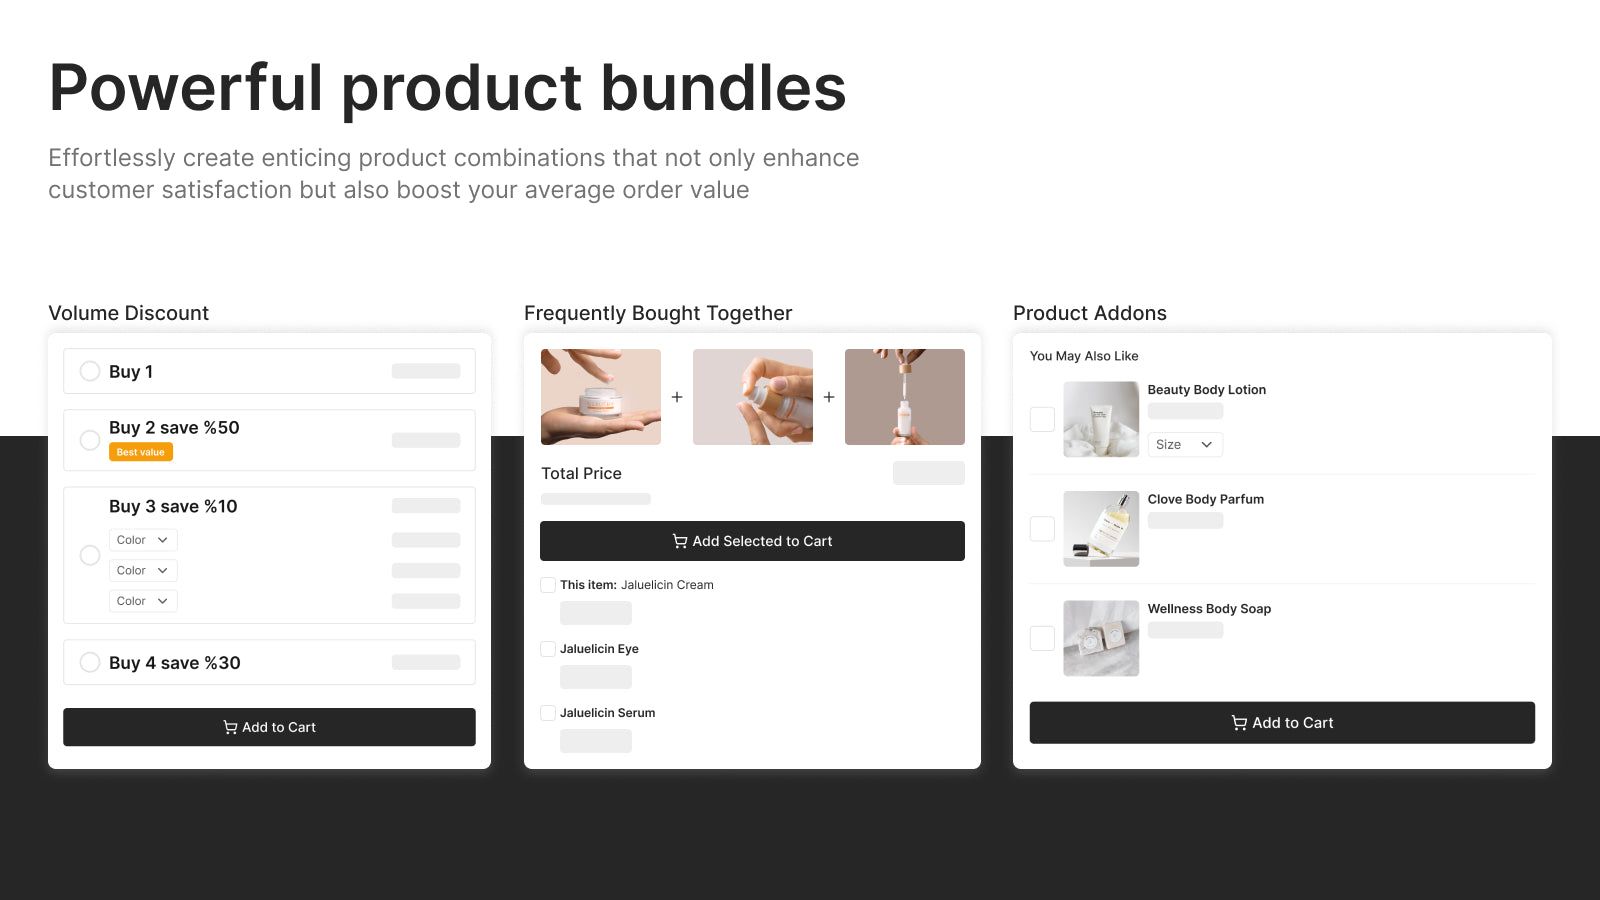 Powerful product bundles